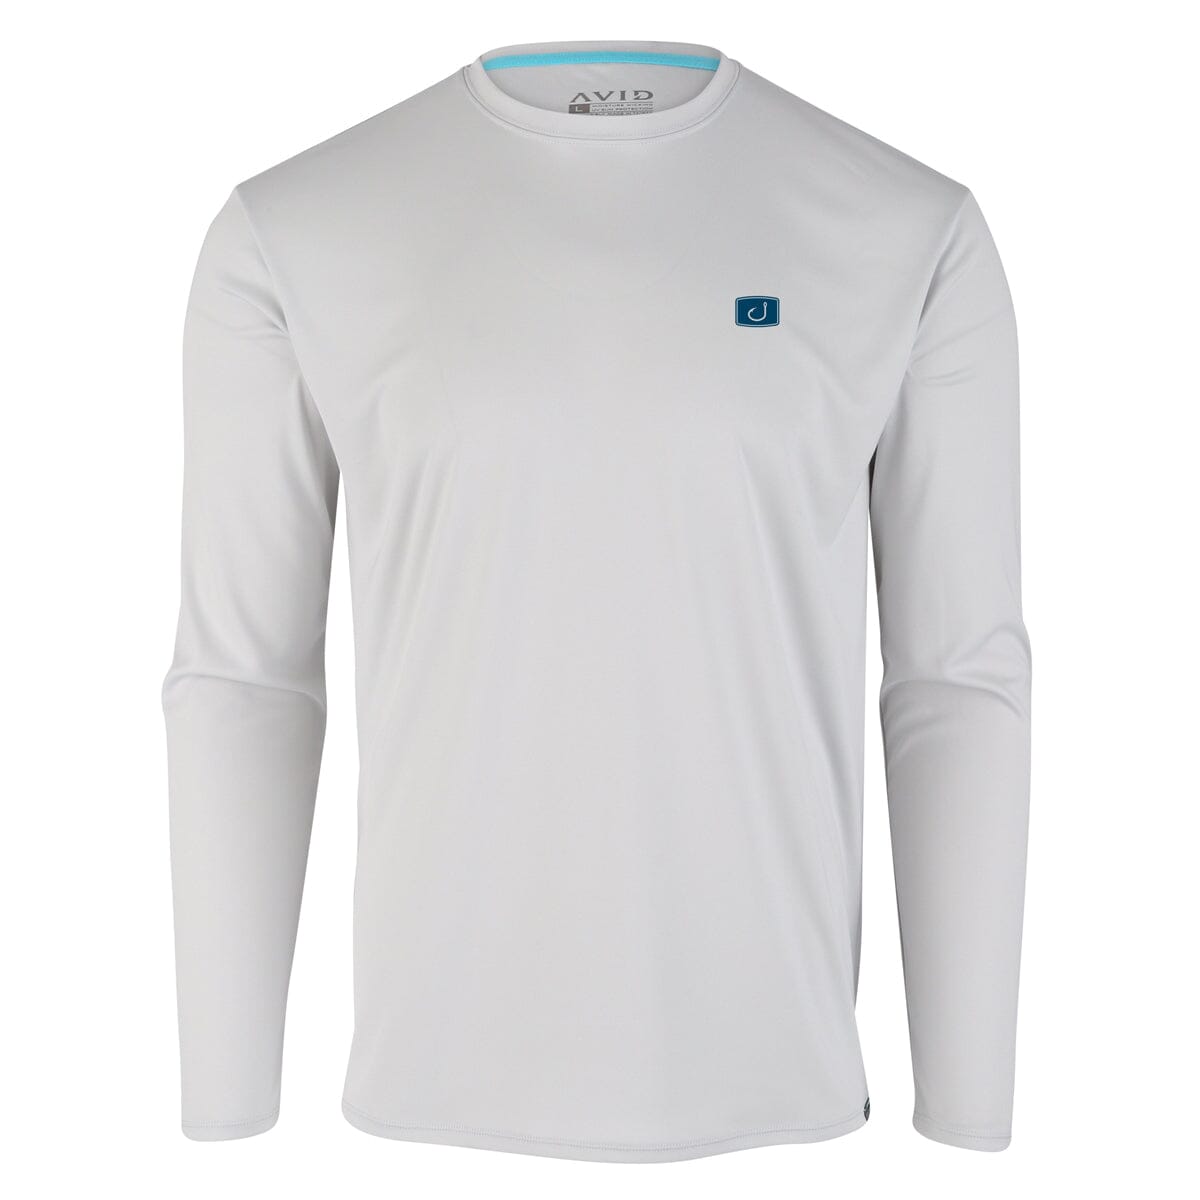 Men's Egret Sunblock Beach Shirt by Chart Your Own Course | Long Sleeve | UPF 50 Sun Protection | Performance Polyester Rash Guard | L / LT.BLUE